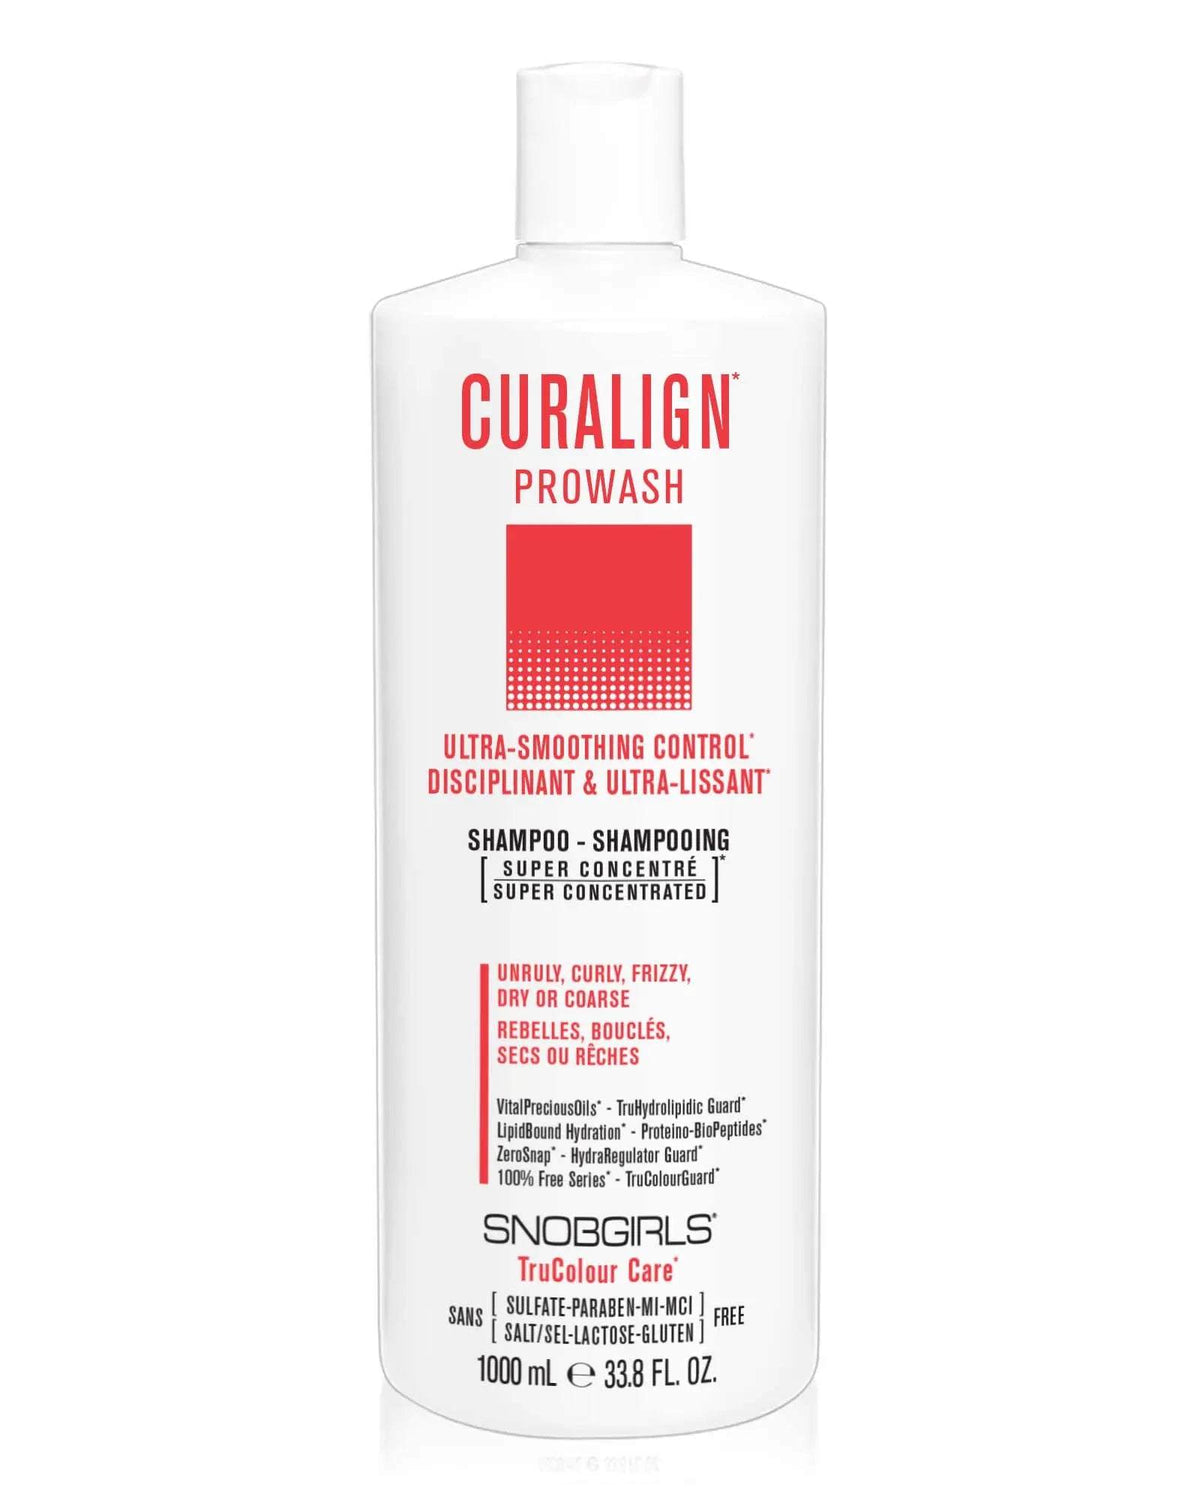 CURALIGN Prowash (shampoo) 1000 mL - SNOBGIRLS Canada